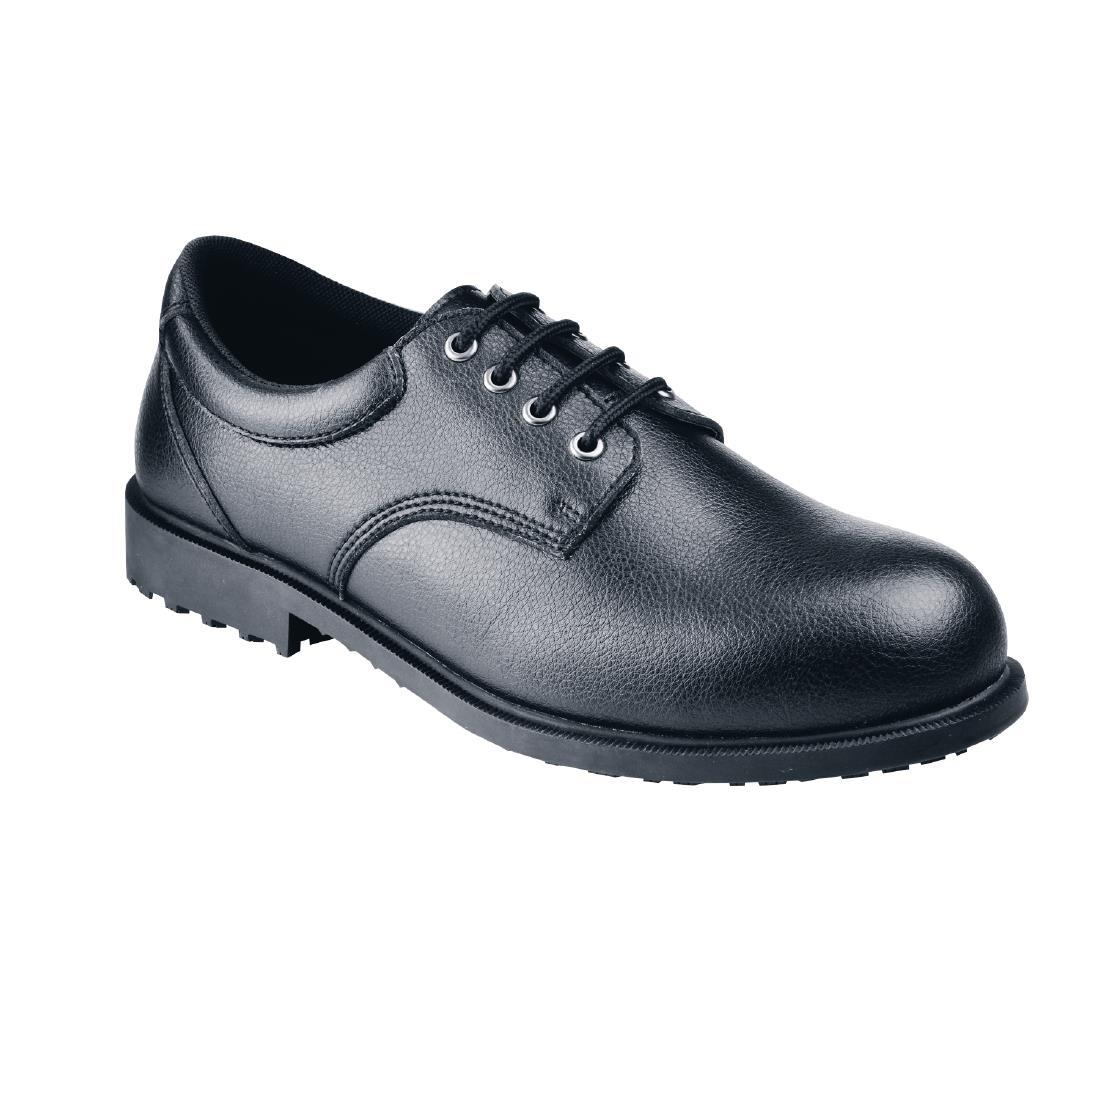 Shoes for Crews Cambridge Steel Toe Dress Shoe Size 46 - BB611-46  - 1